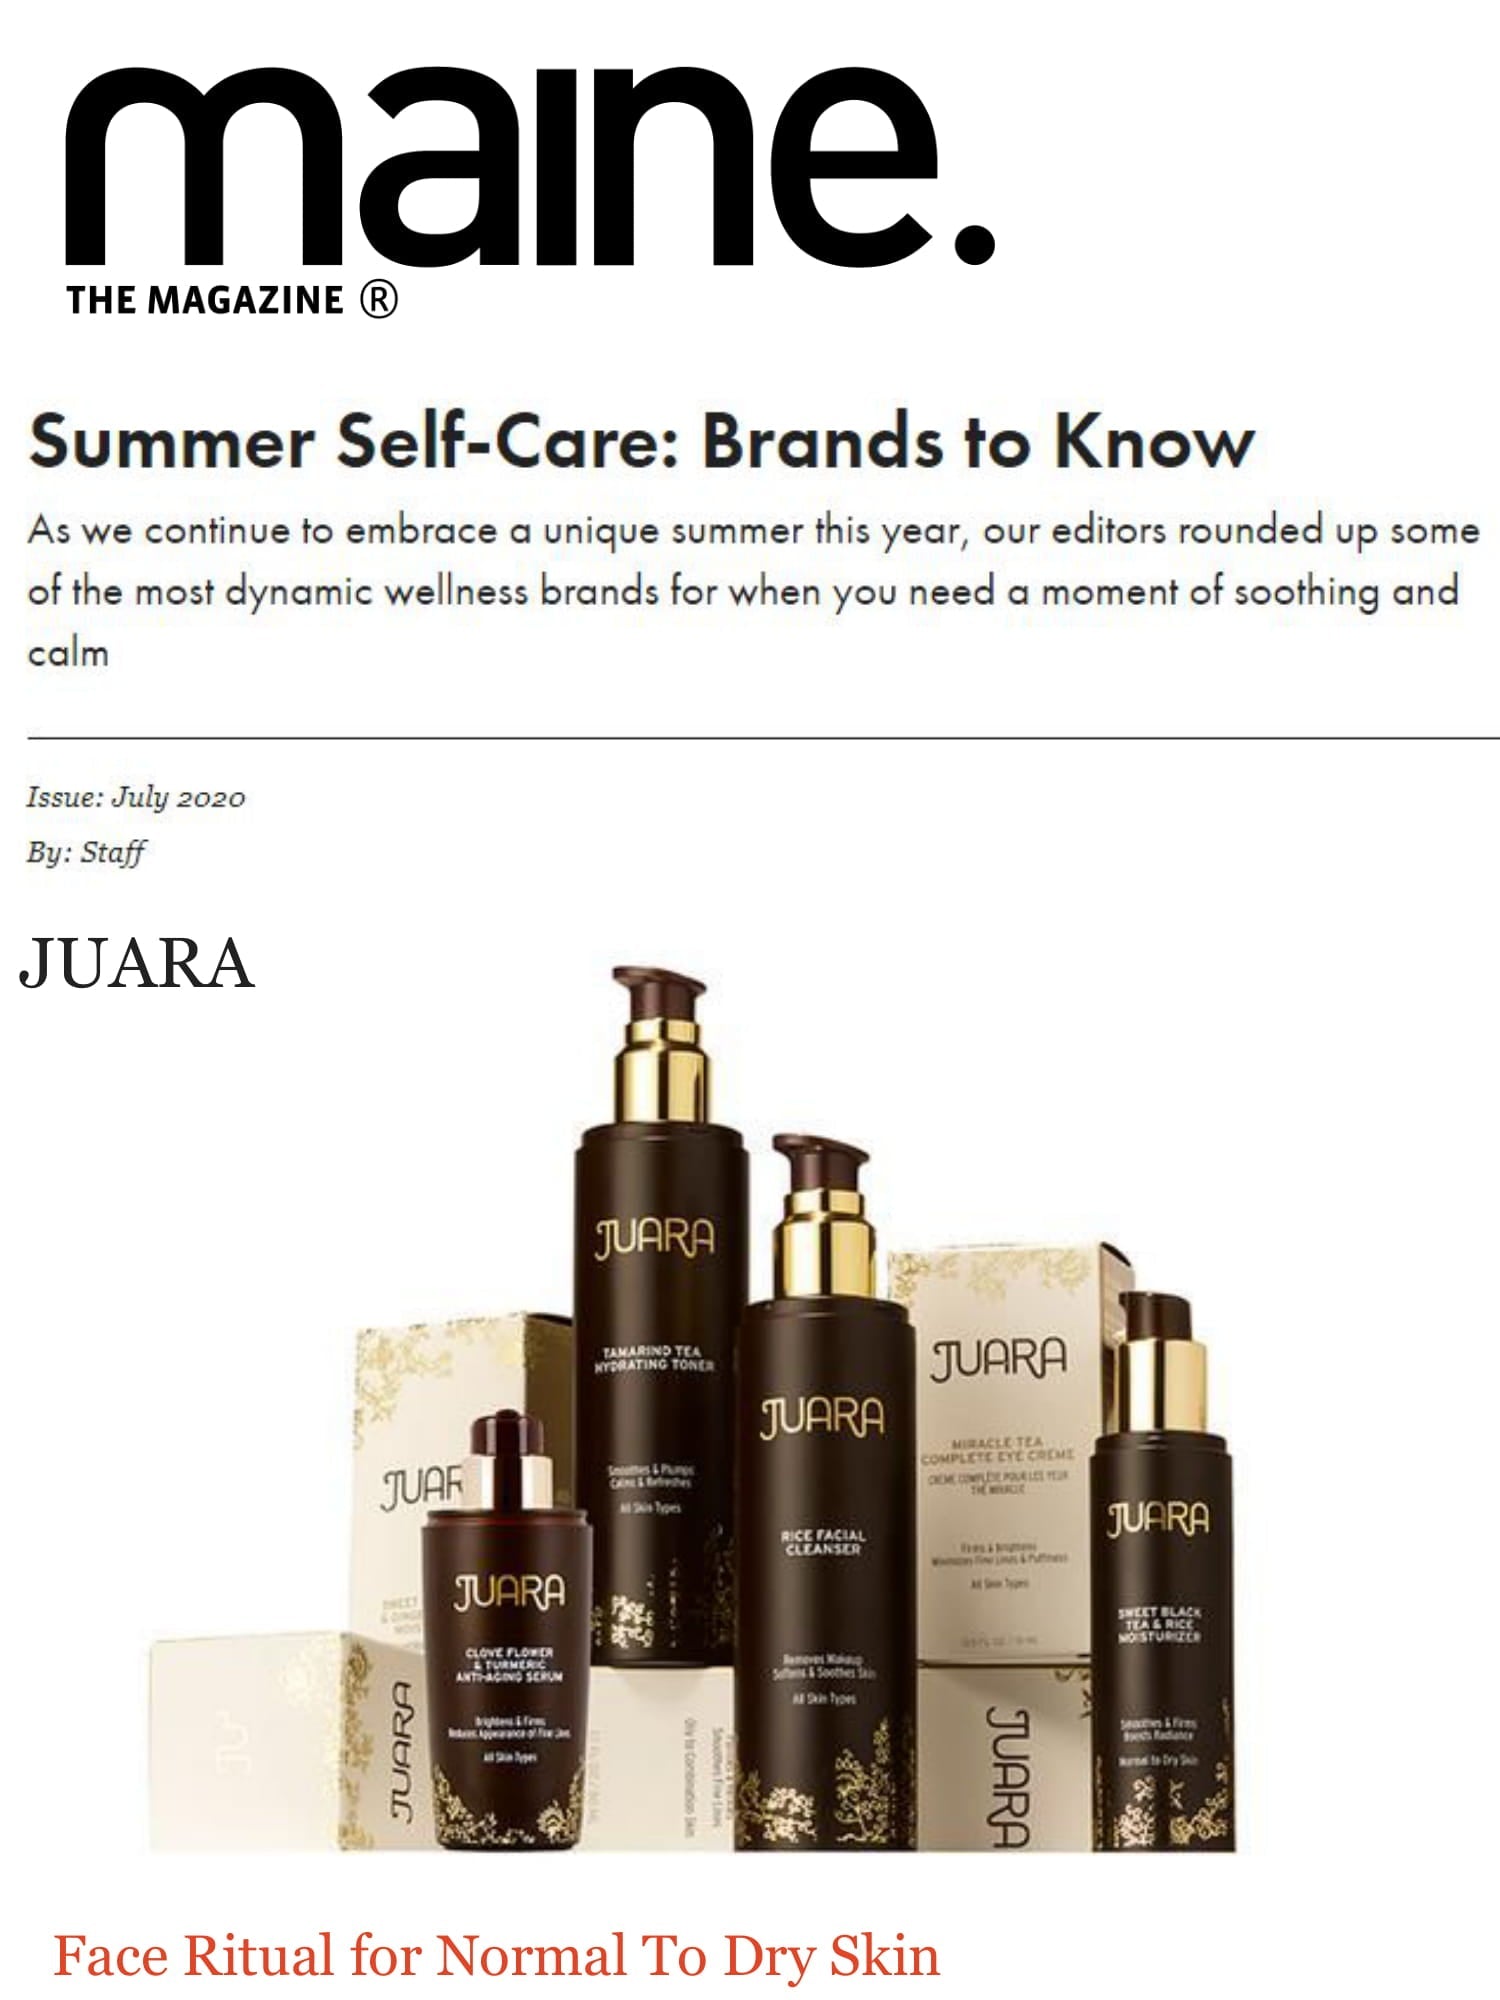 THE MAINE: Summer Self-Care A-Z: Brands to Know JUARA Skincare